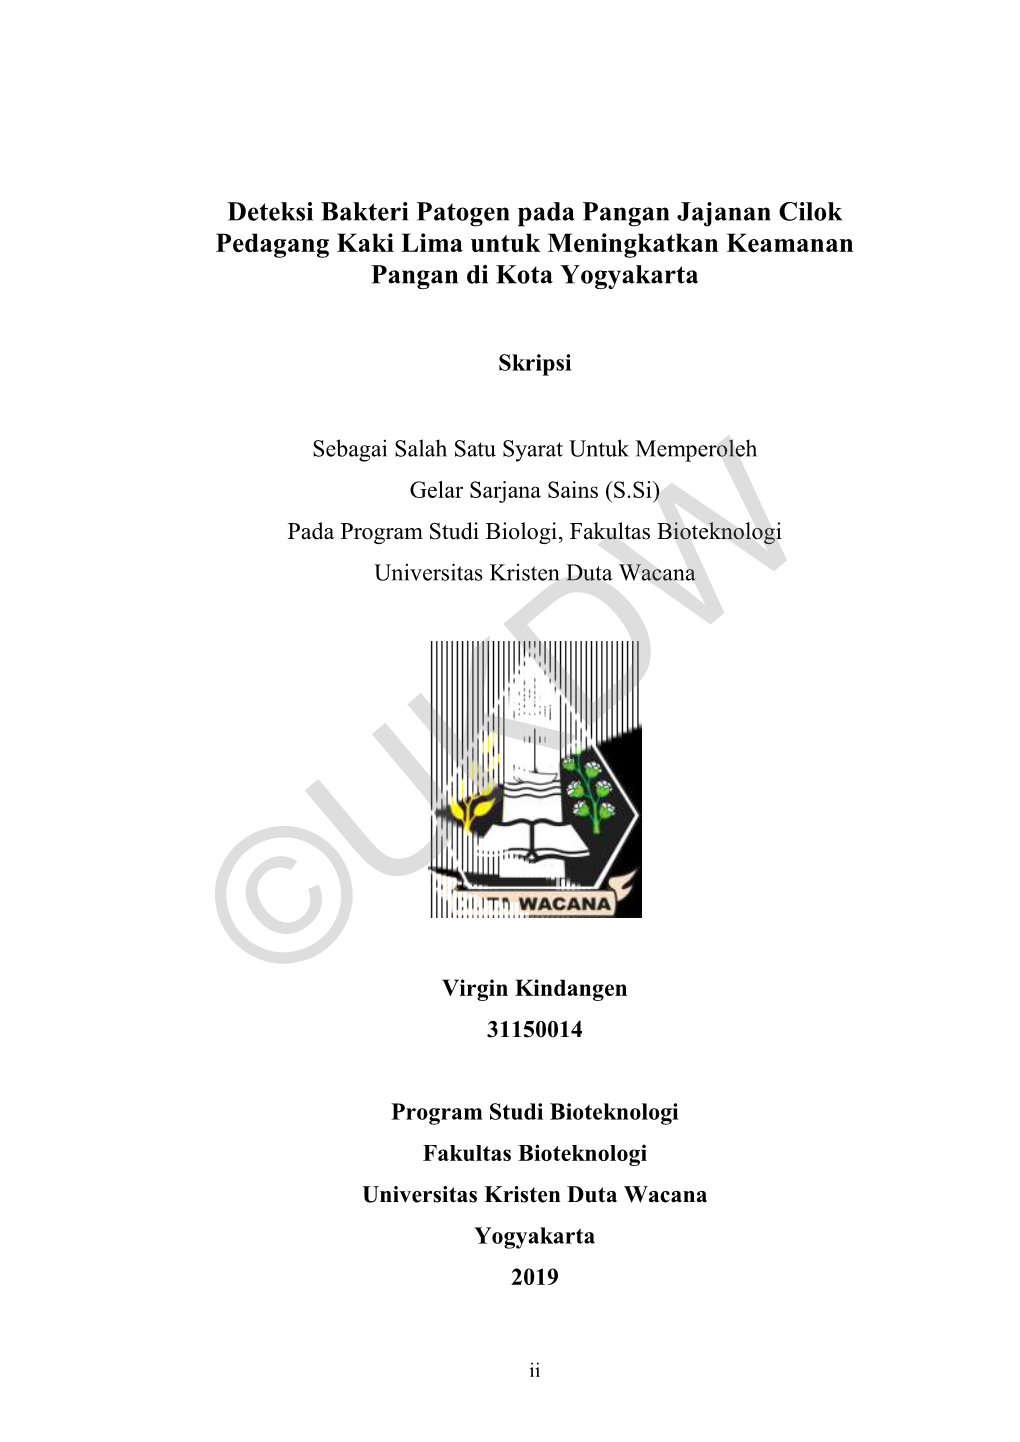 Deteksi Bakteri Patogen Pada Pangan Jajanan Cilok Pedagang Kaki Lima Untuk Meningkatkan Keamanan Pangan Di Kota Yogyakarta